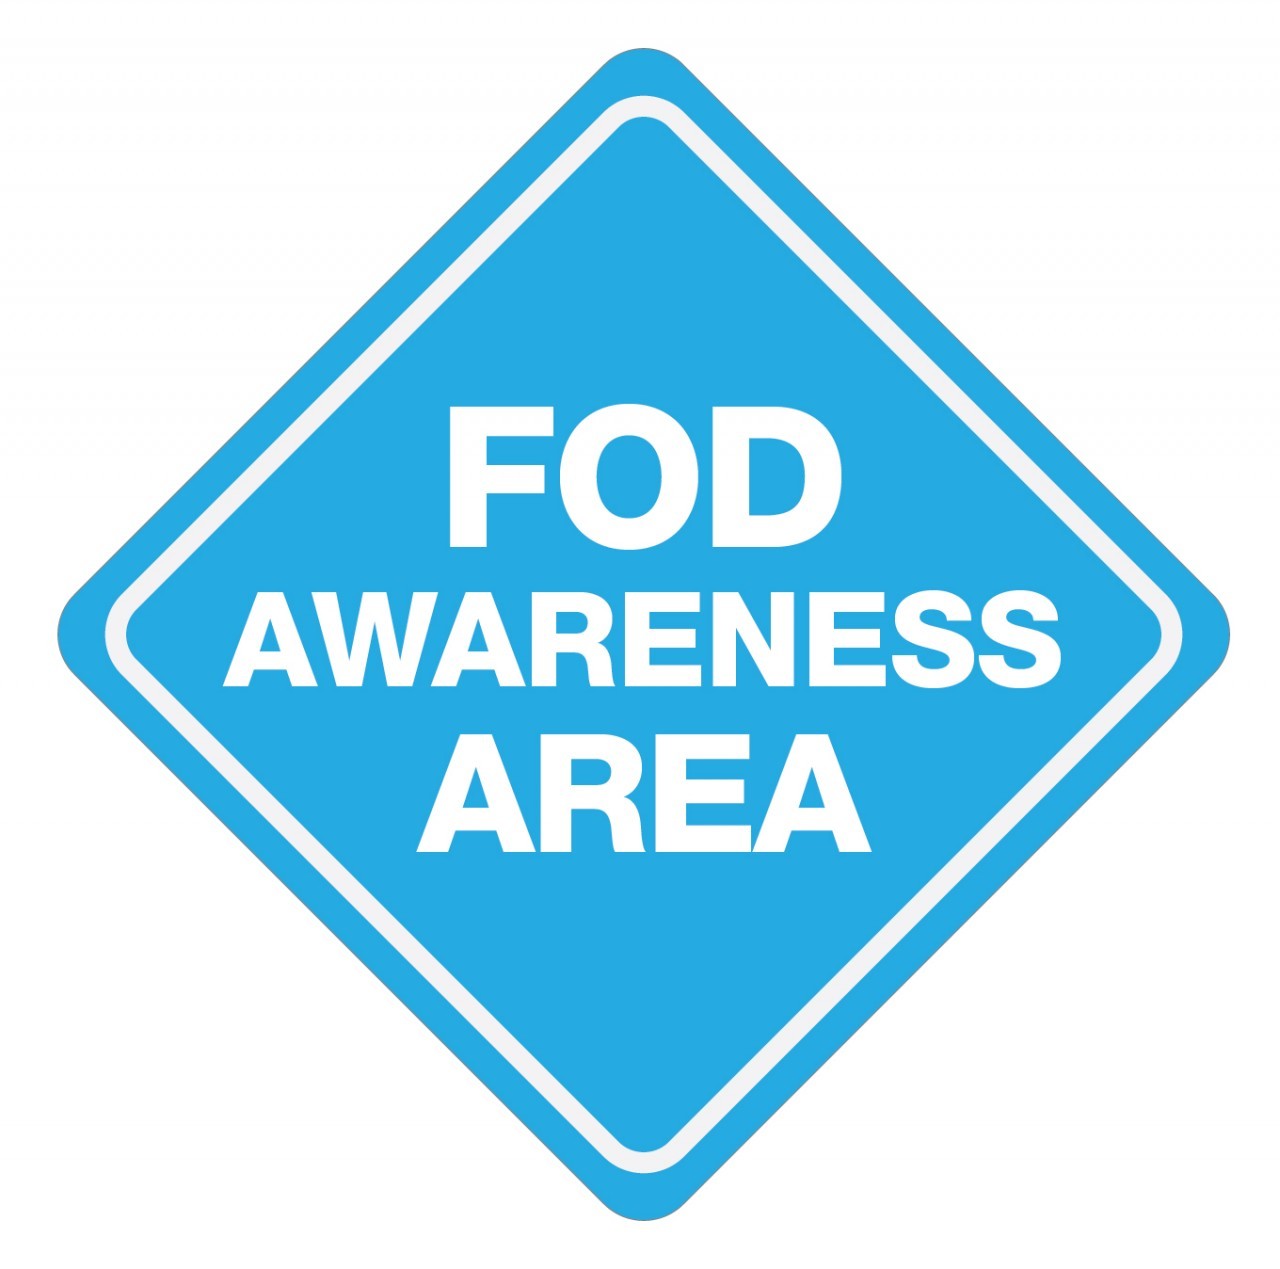 Add company. Fod. Fod Awareness area. Anti fod. Aware sign.